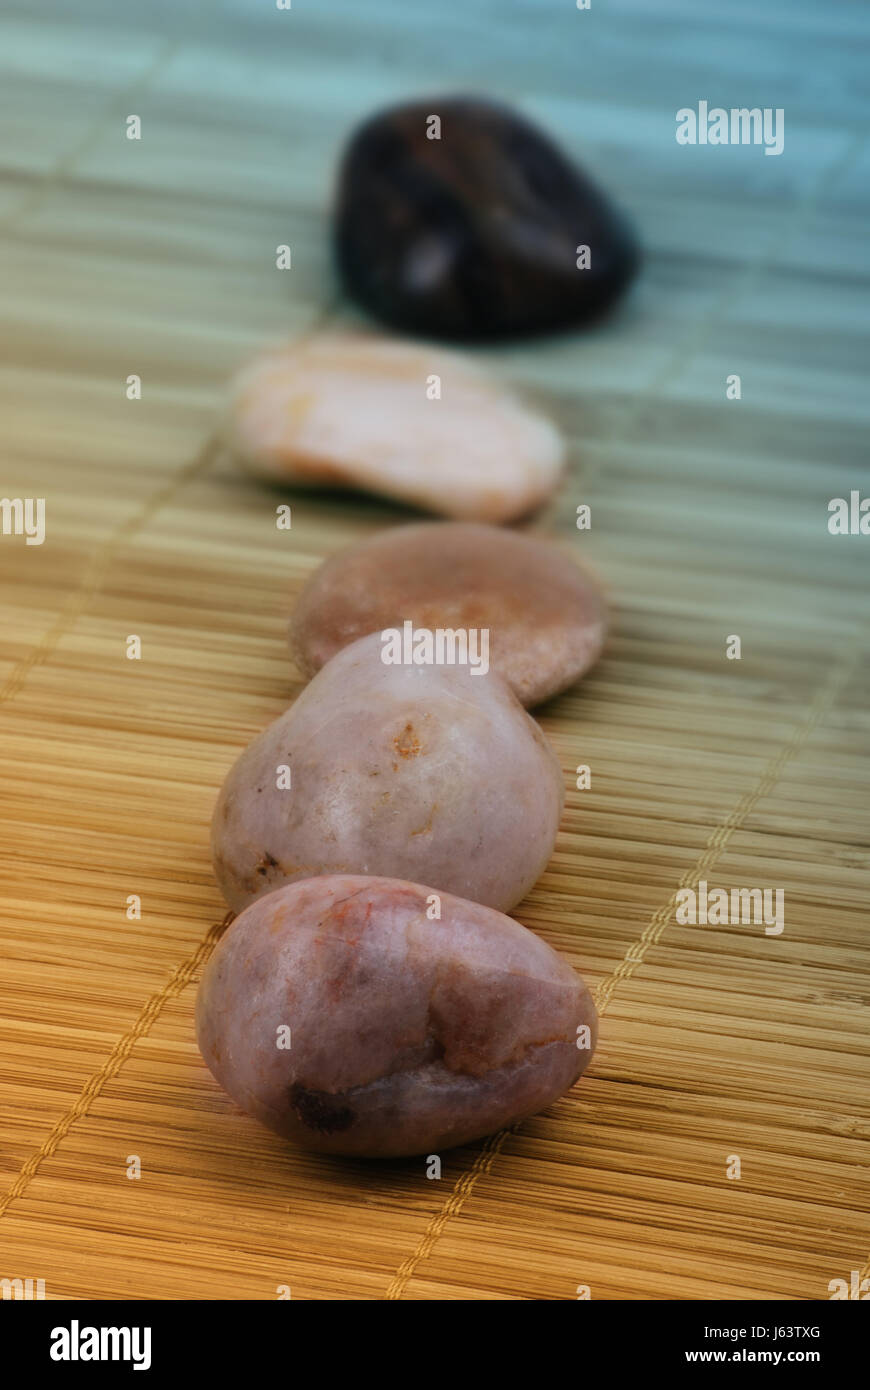 stone wellness mat silicic bast phloem nature stones natural macro close-up Stock Photo